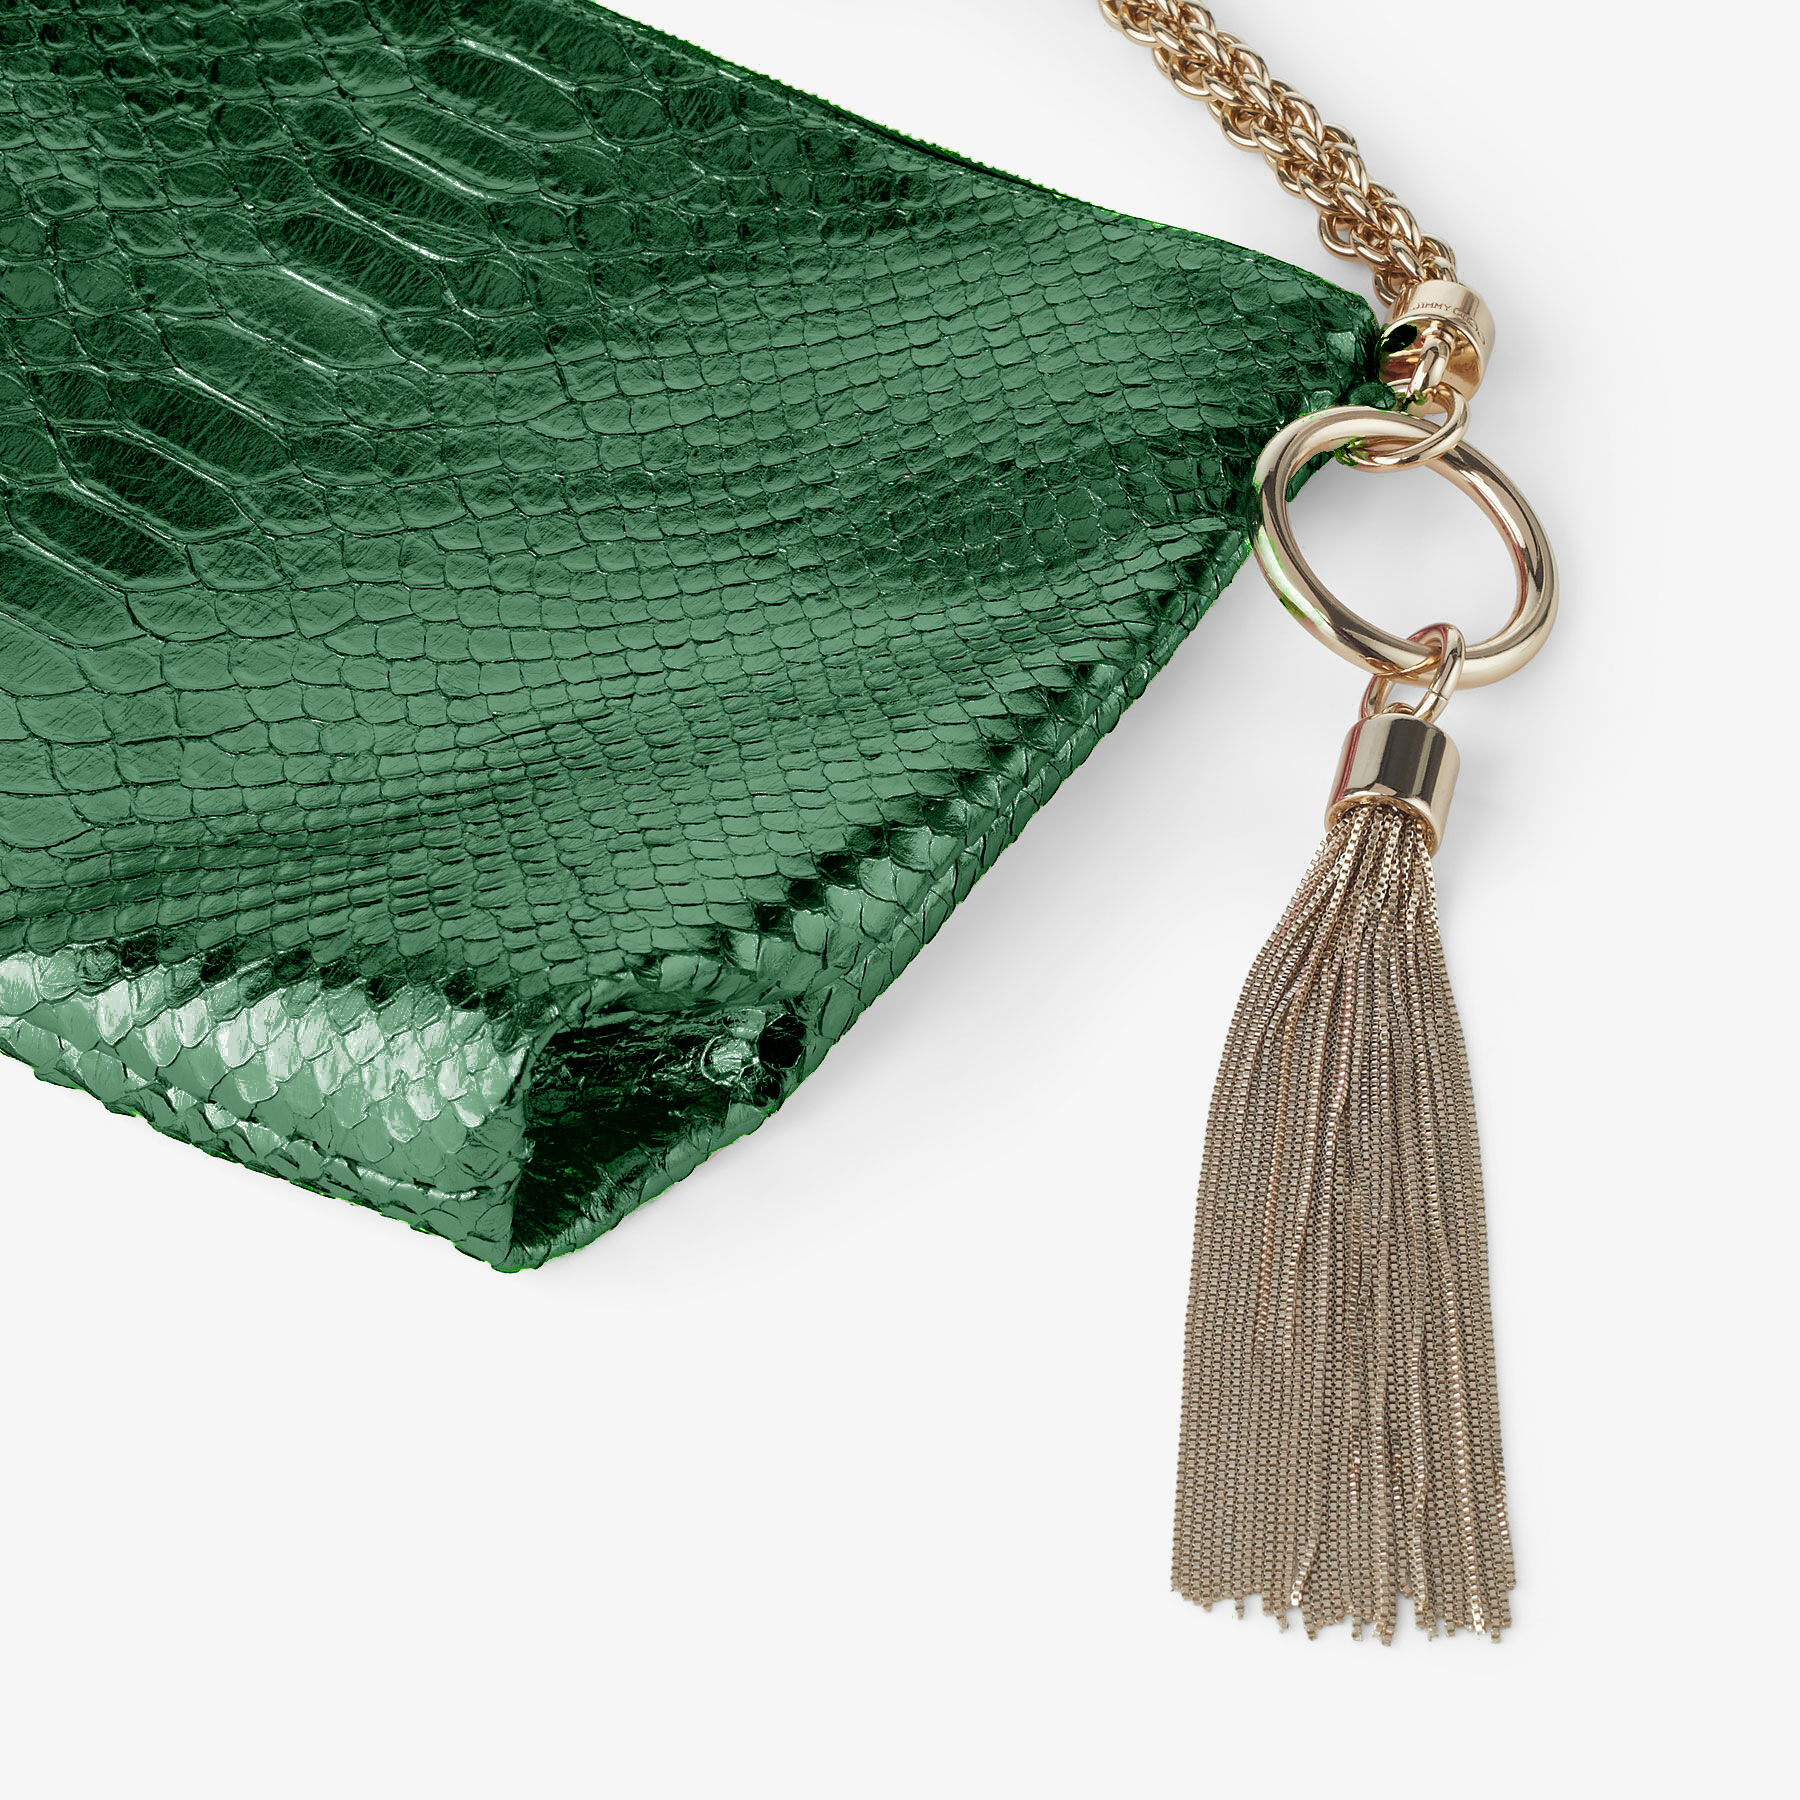 CALLIE |Dark Green Metallic Snake Printed Leather Clutch Bag | New 